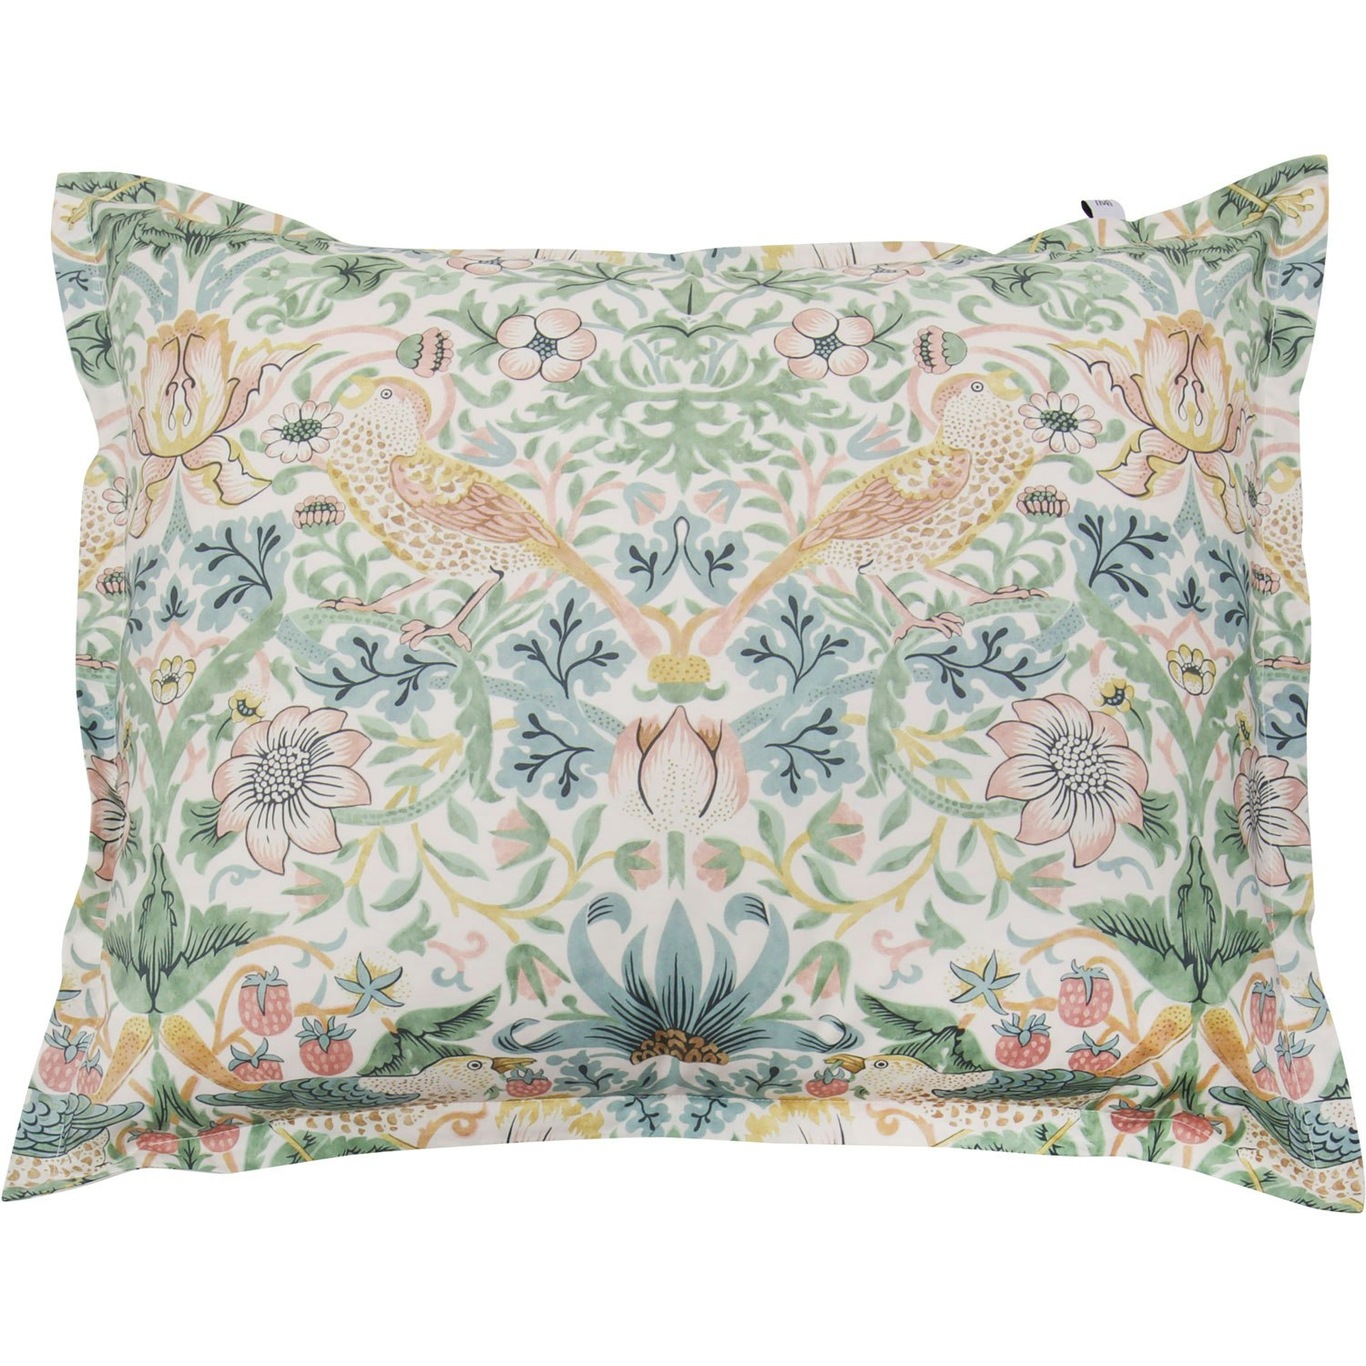 Morris & Co. Strawberry Thief Pillowcase, 50x60 cm